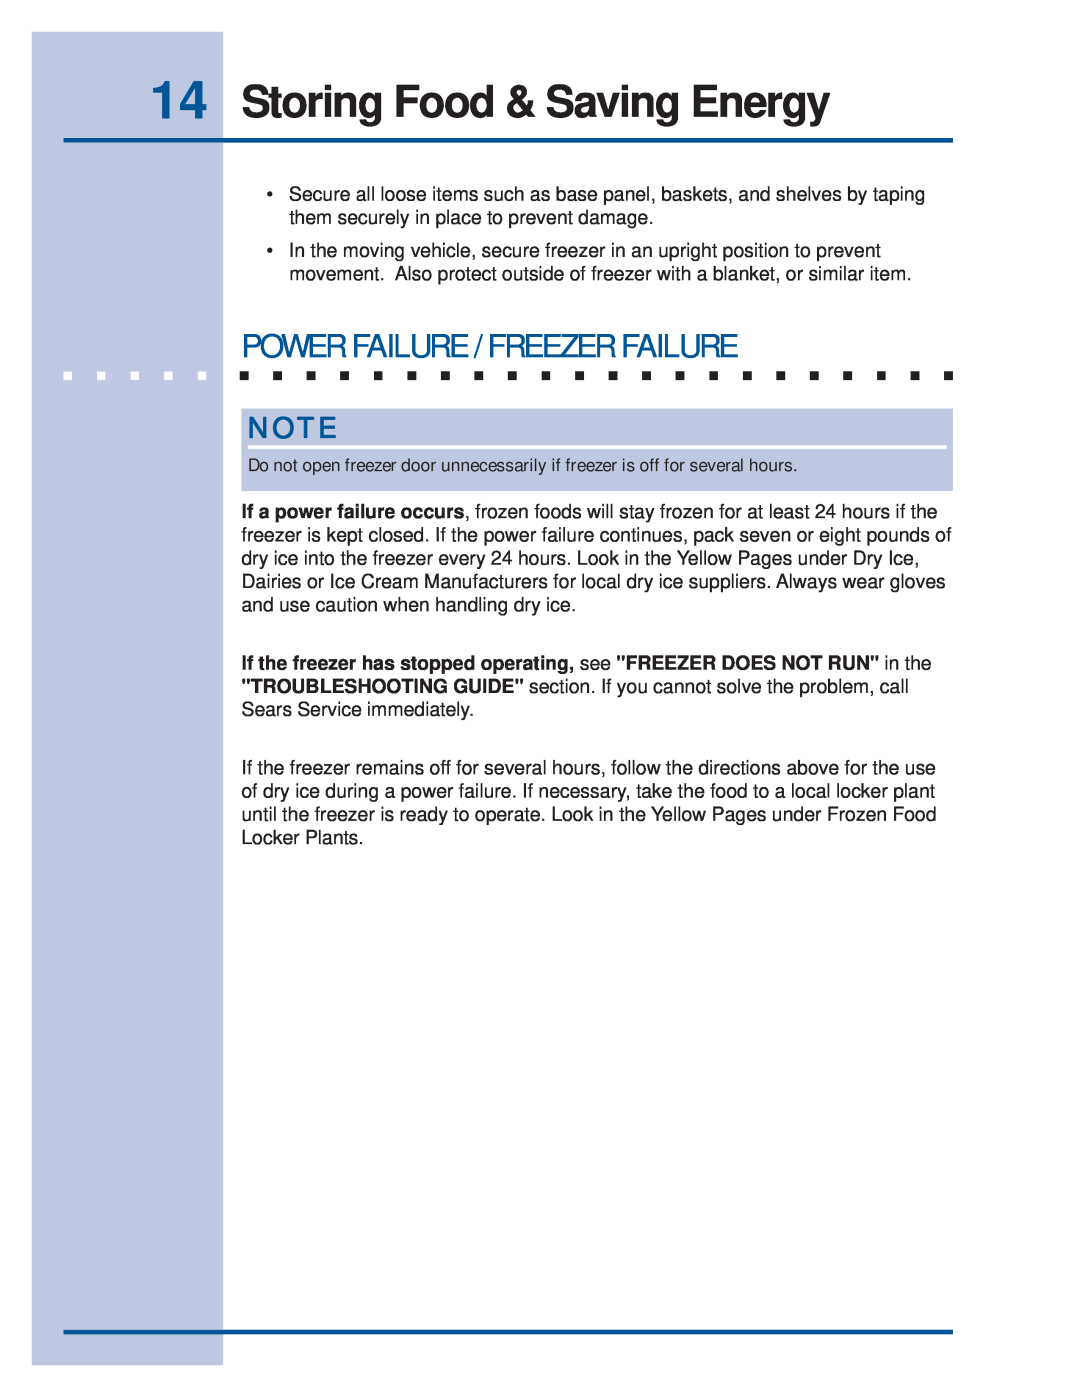 Electrolux Refrigerator manual Storing Food & Saving Energy, Power Failure / Freezer Failure 